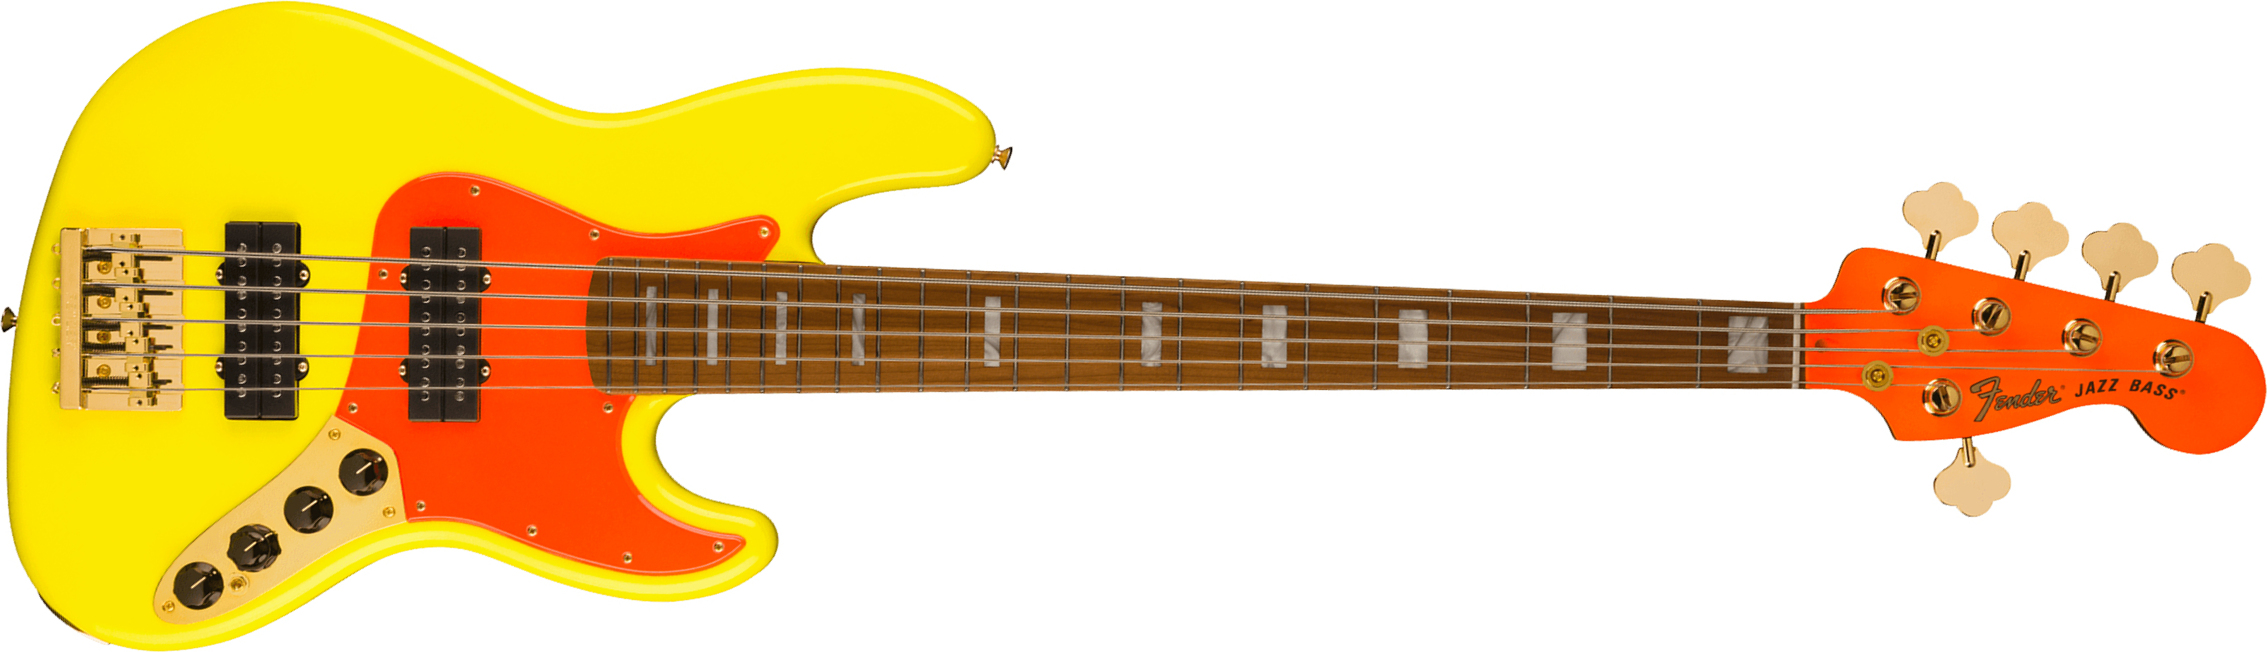 Fender Jazz Bass Mononeon V Mex Signature 5c Active Mn - Neon Yellow - Solid body elektrische bas - Main picture